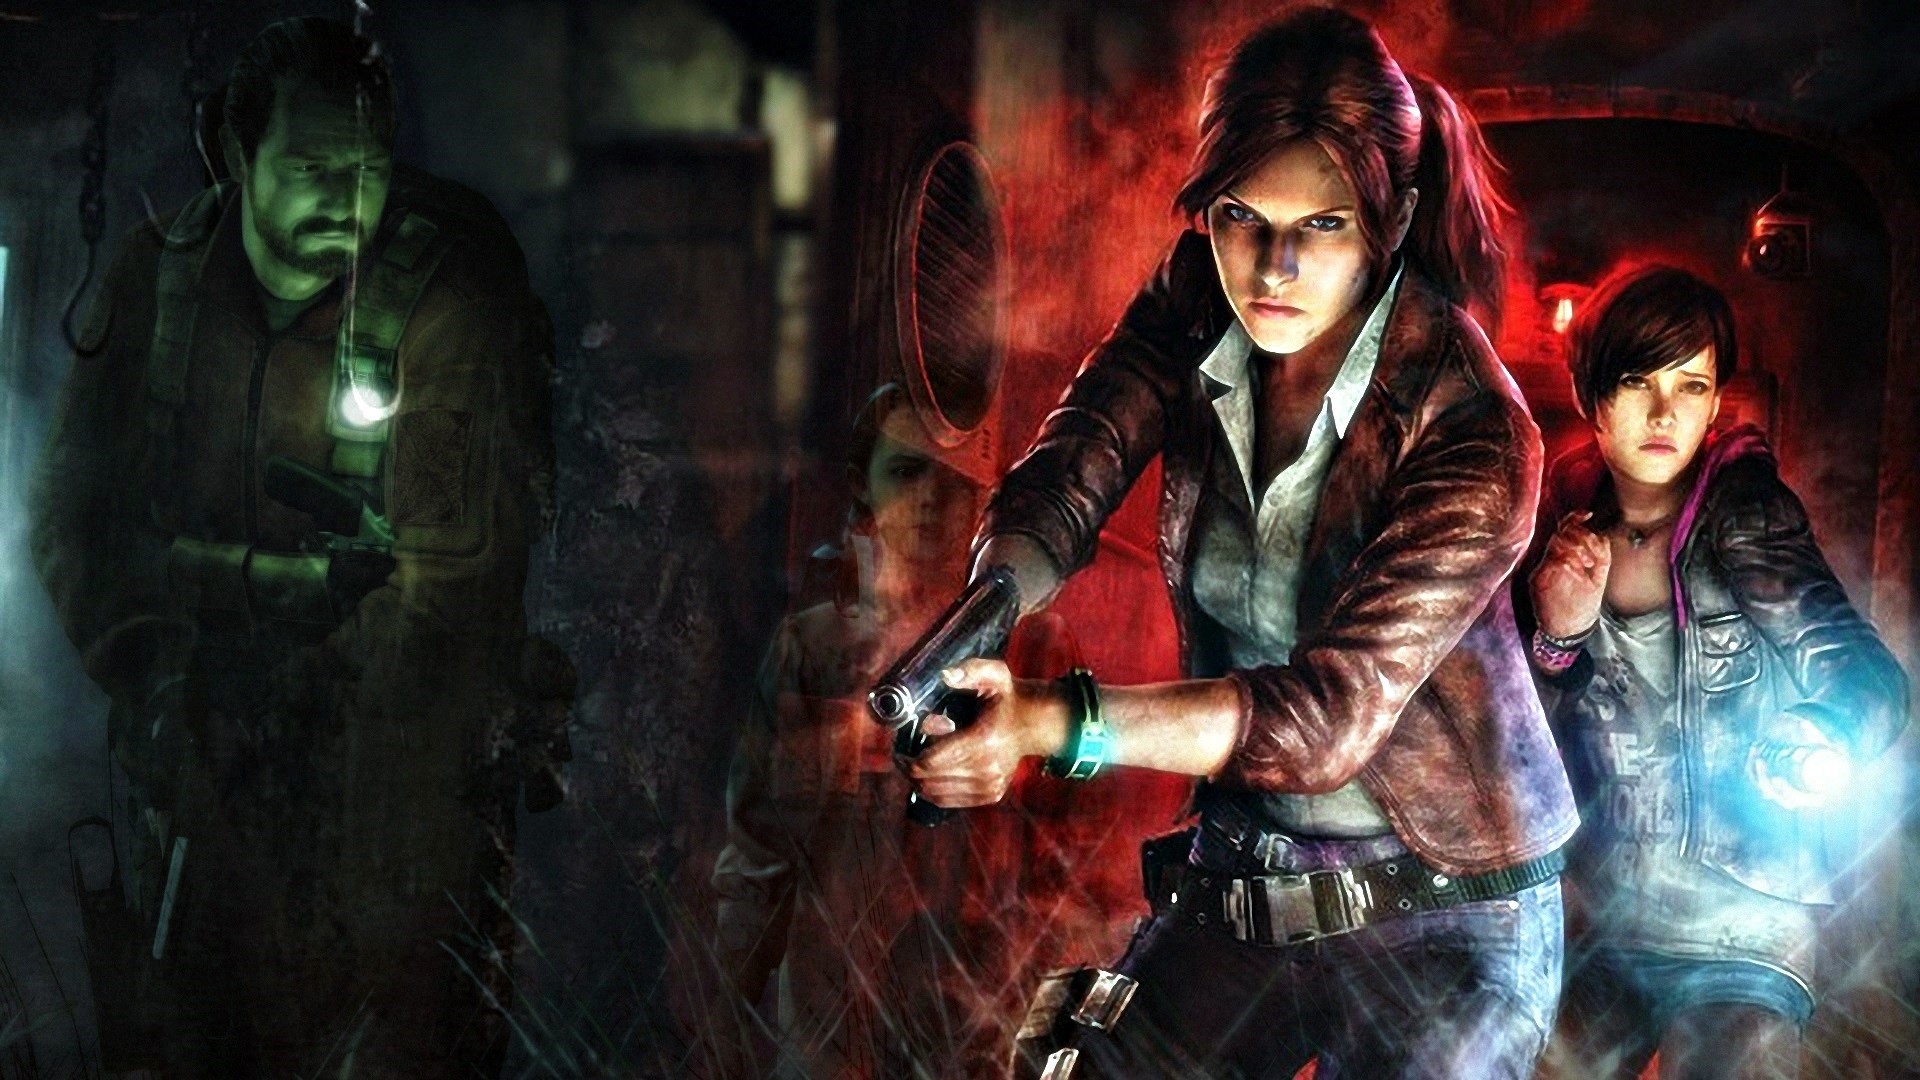 Hunk - Resident Evil 2 (Video Game) 4K wallpaper download